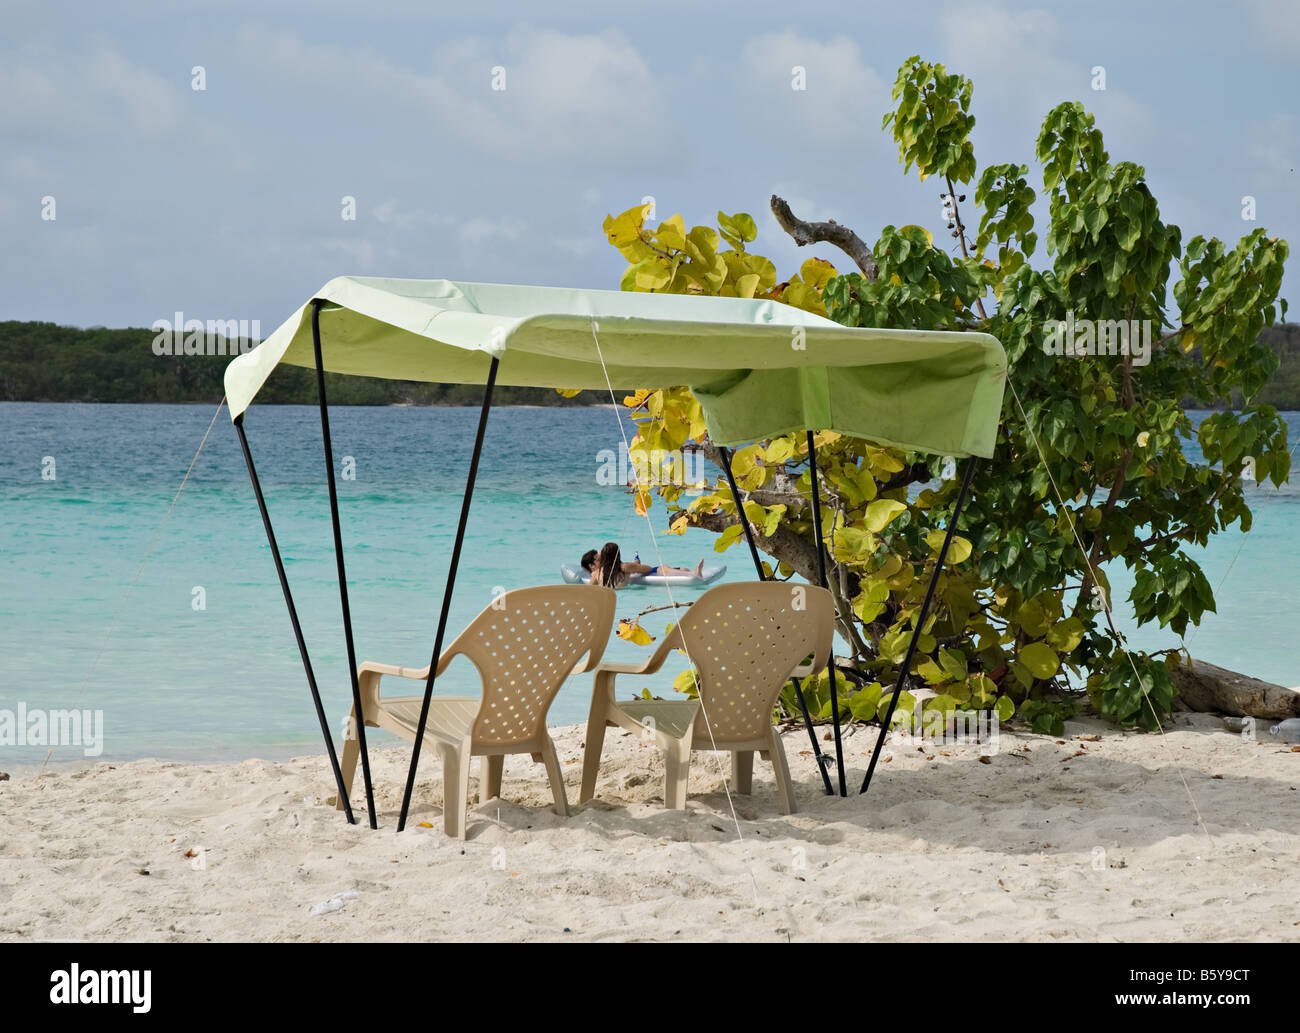 Beach Umbrella or Cabana at Playa Azul Morrocoy National Park Venezuela Stock Photo